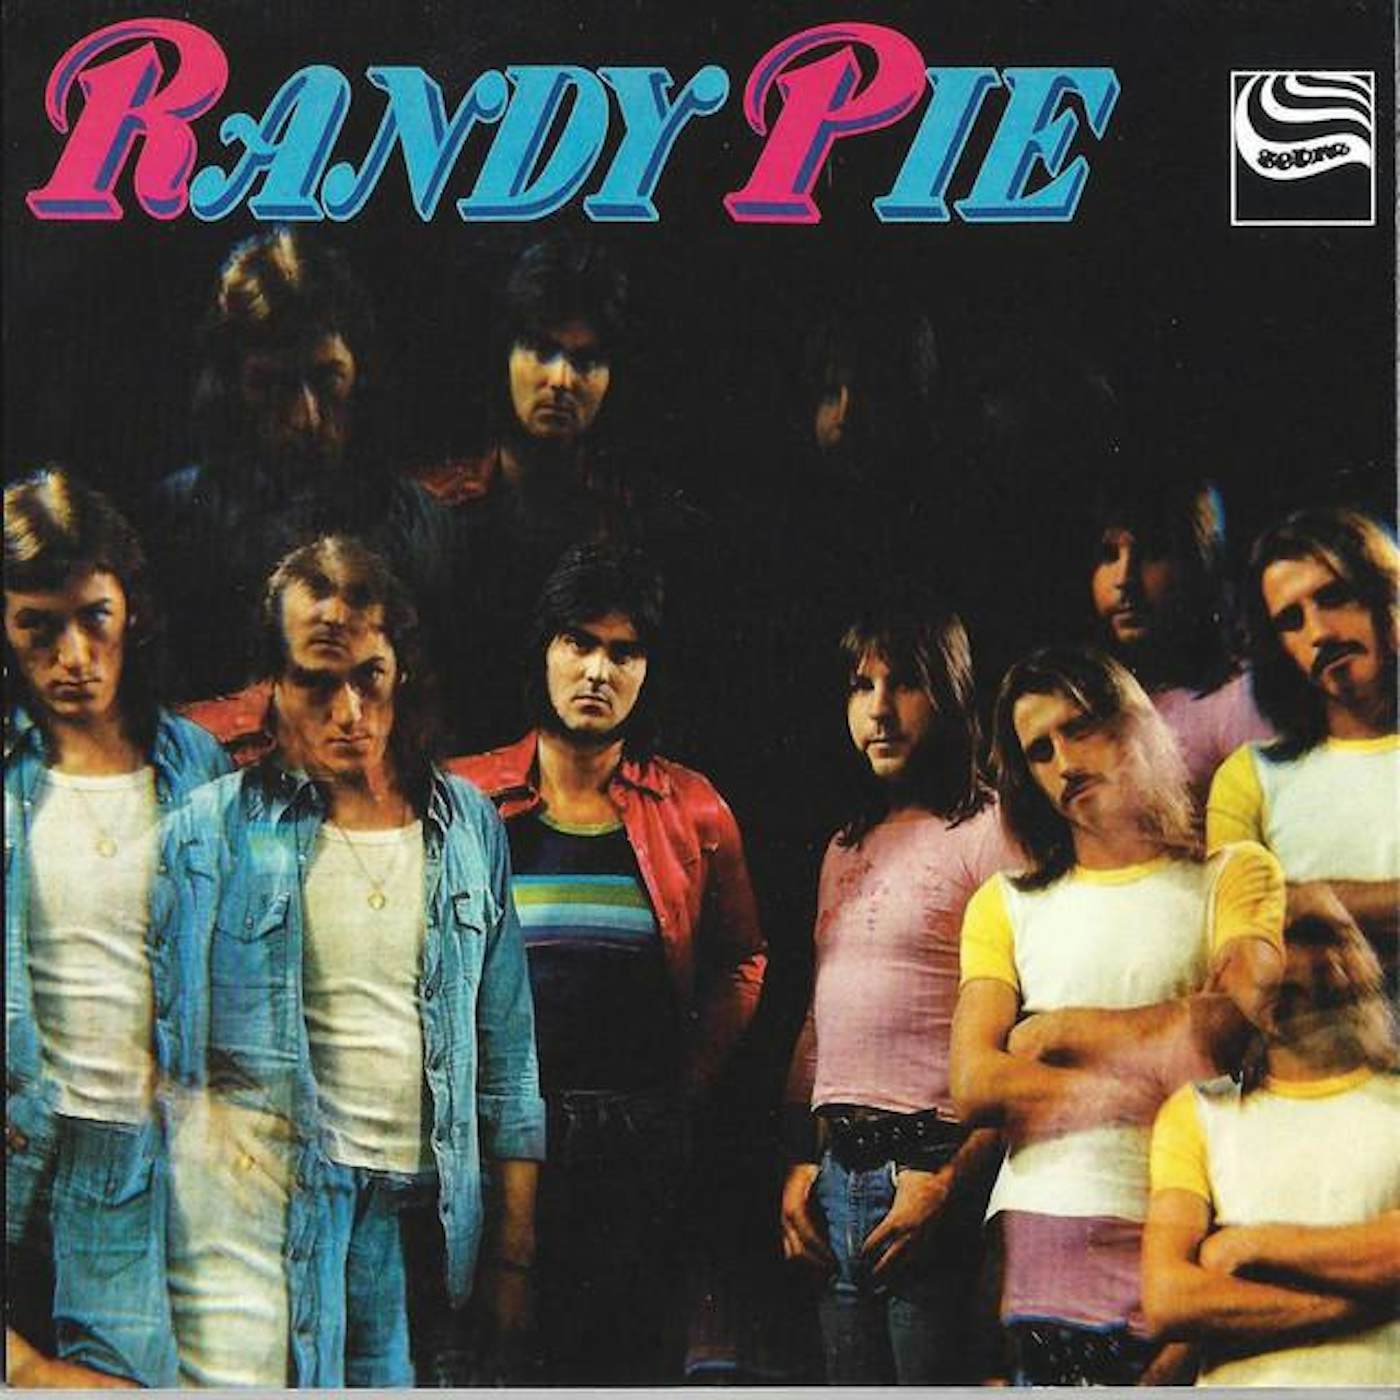 Randy Pie